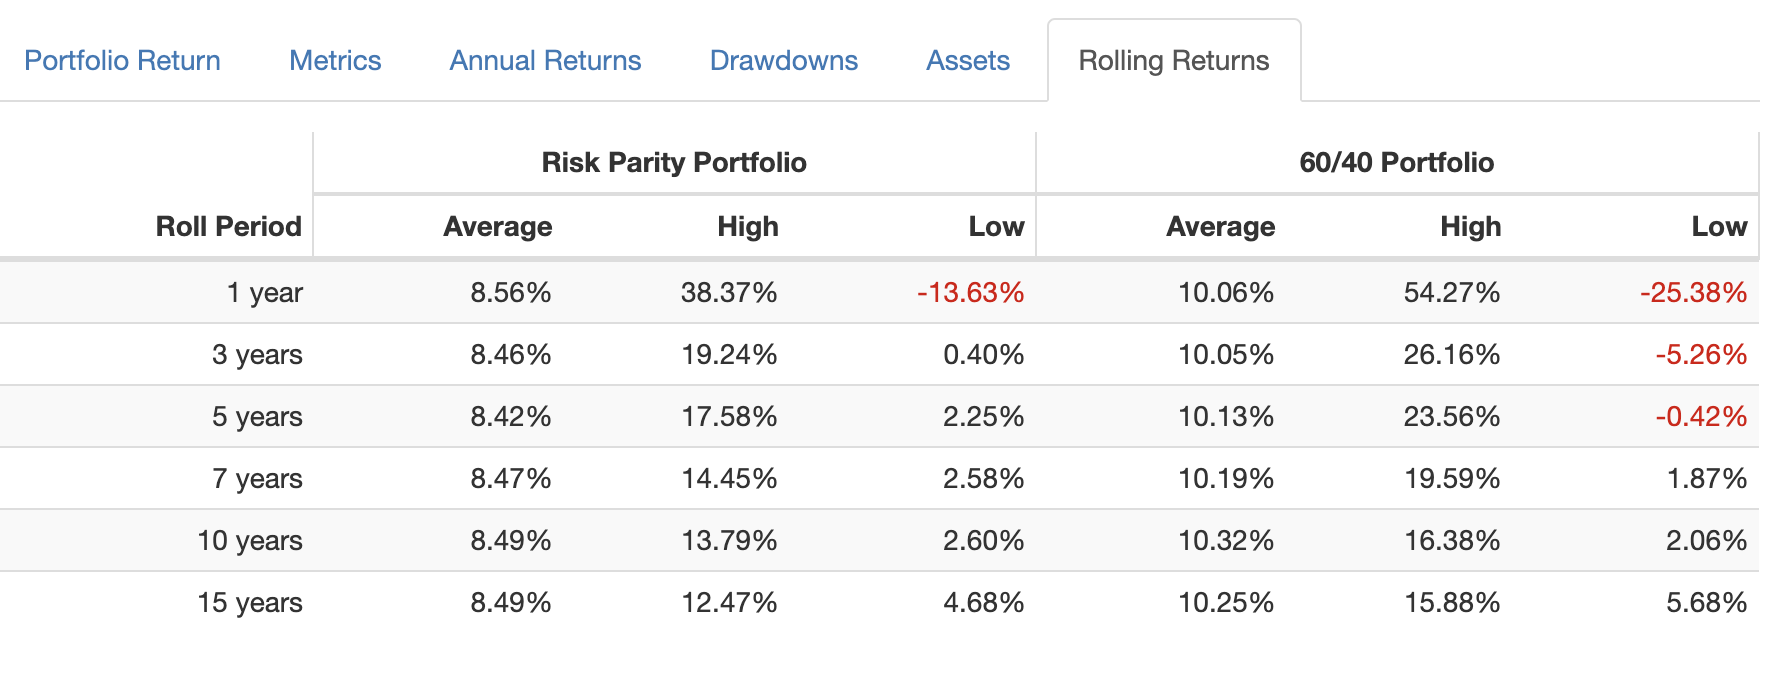 Low Roll Period: Risk Parity Portfolio vs 60/40 Portfolio